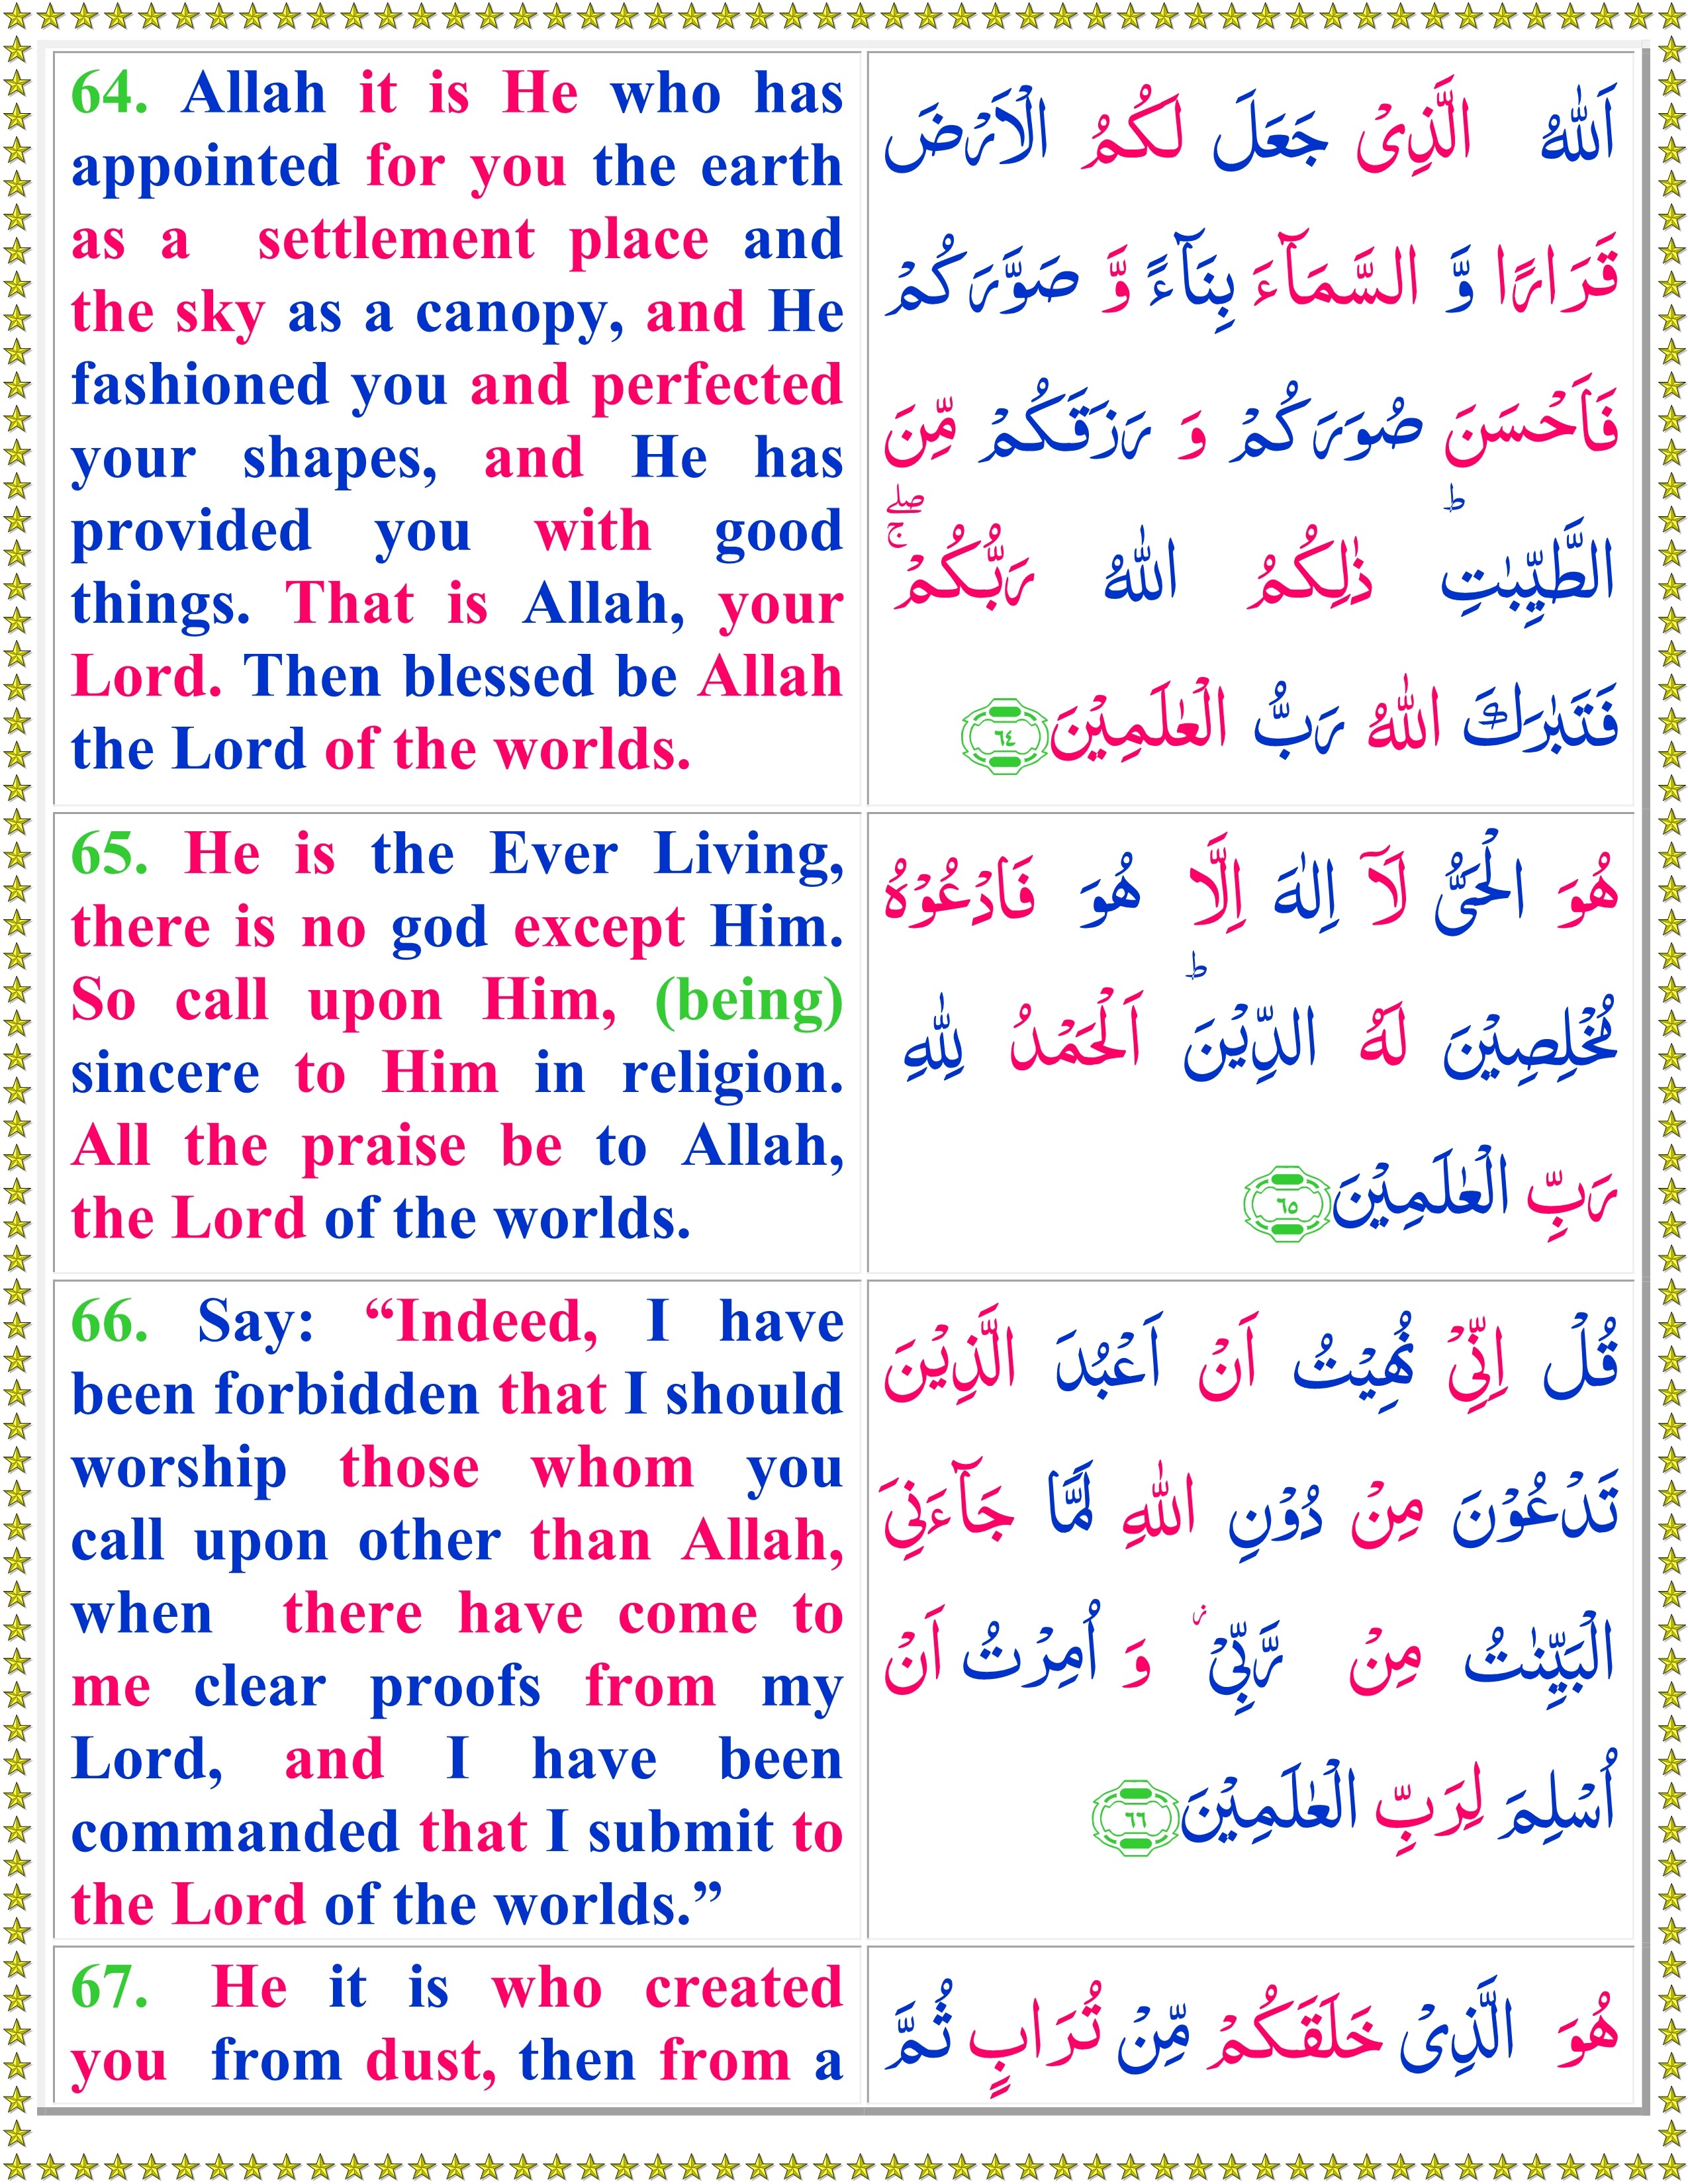 Read Surah Al Momin With English Translation - Page 2 of 3 - Quran o Sunnat